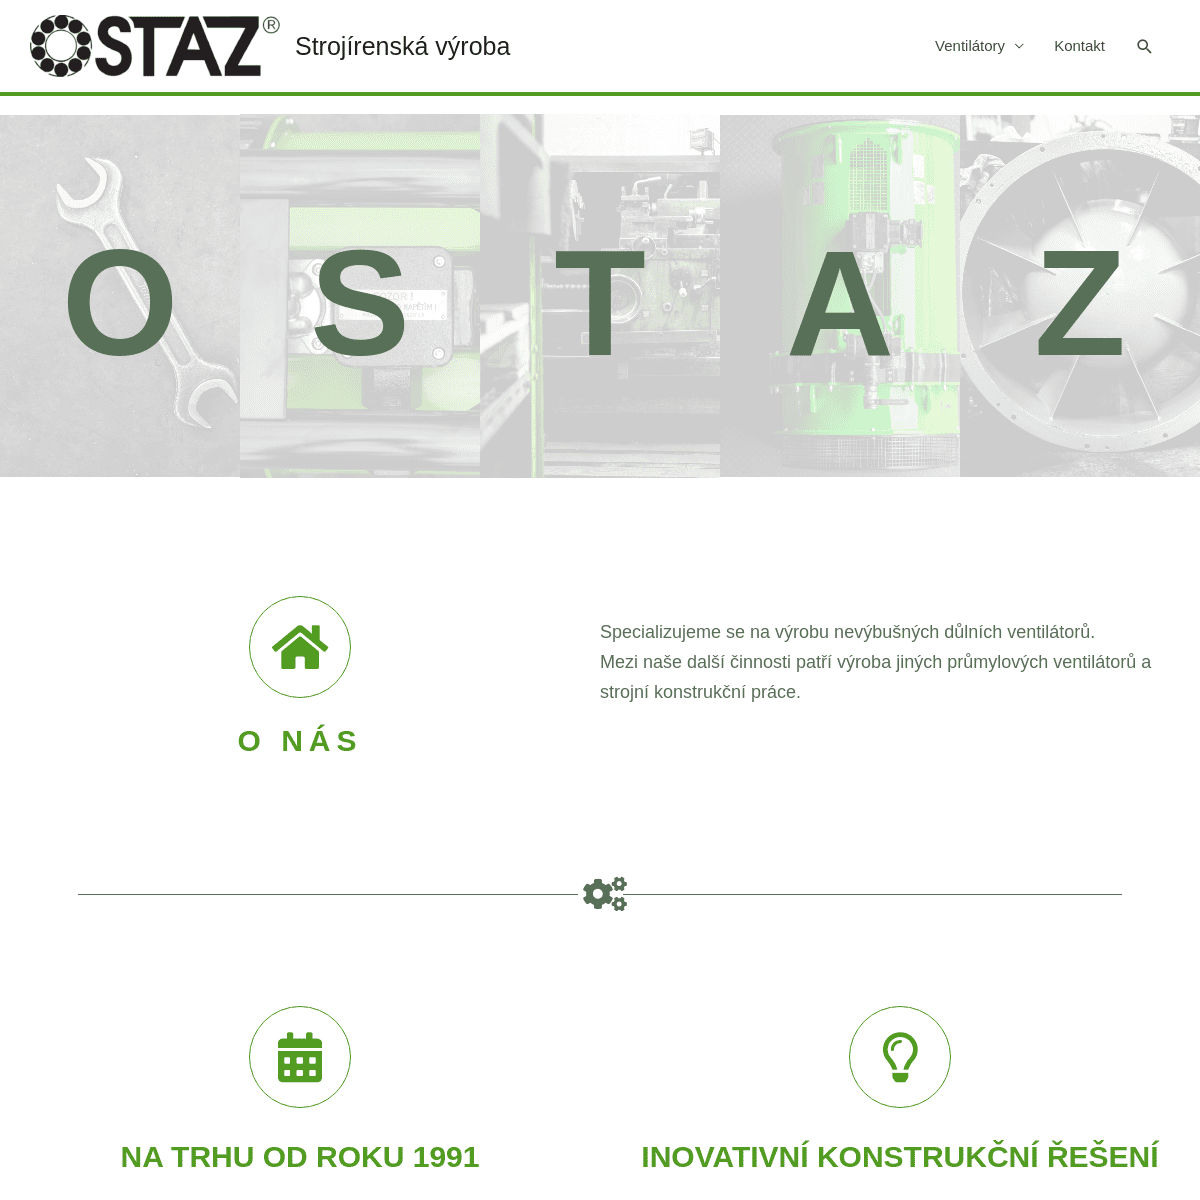 A complete backup of https://ostaz.cz